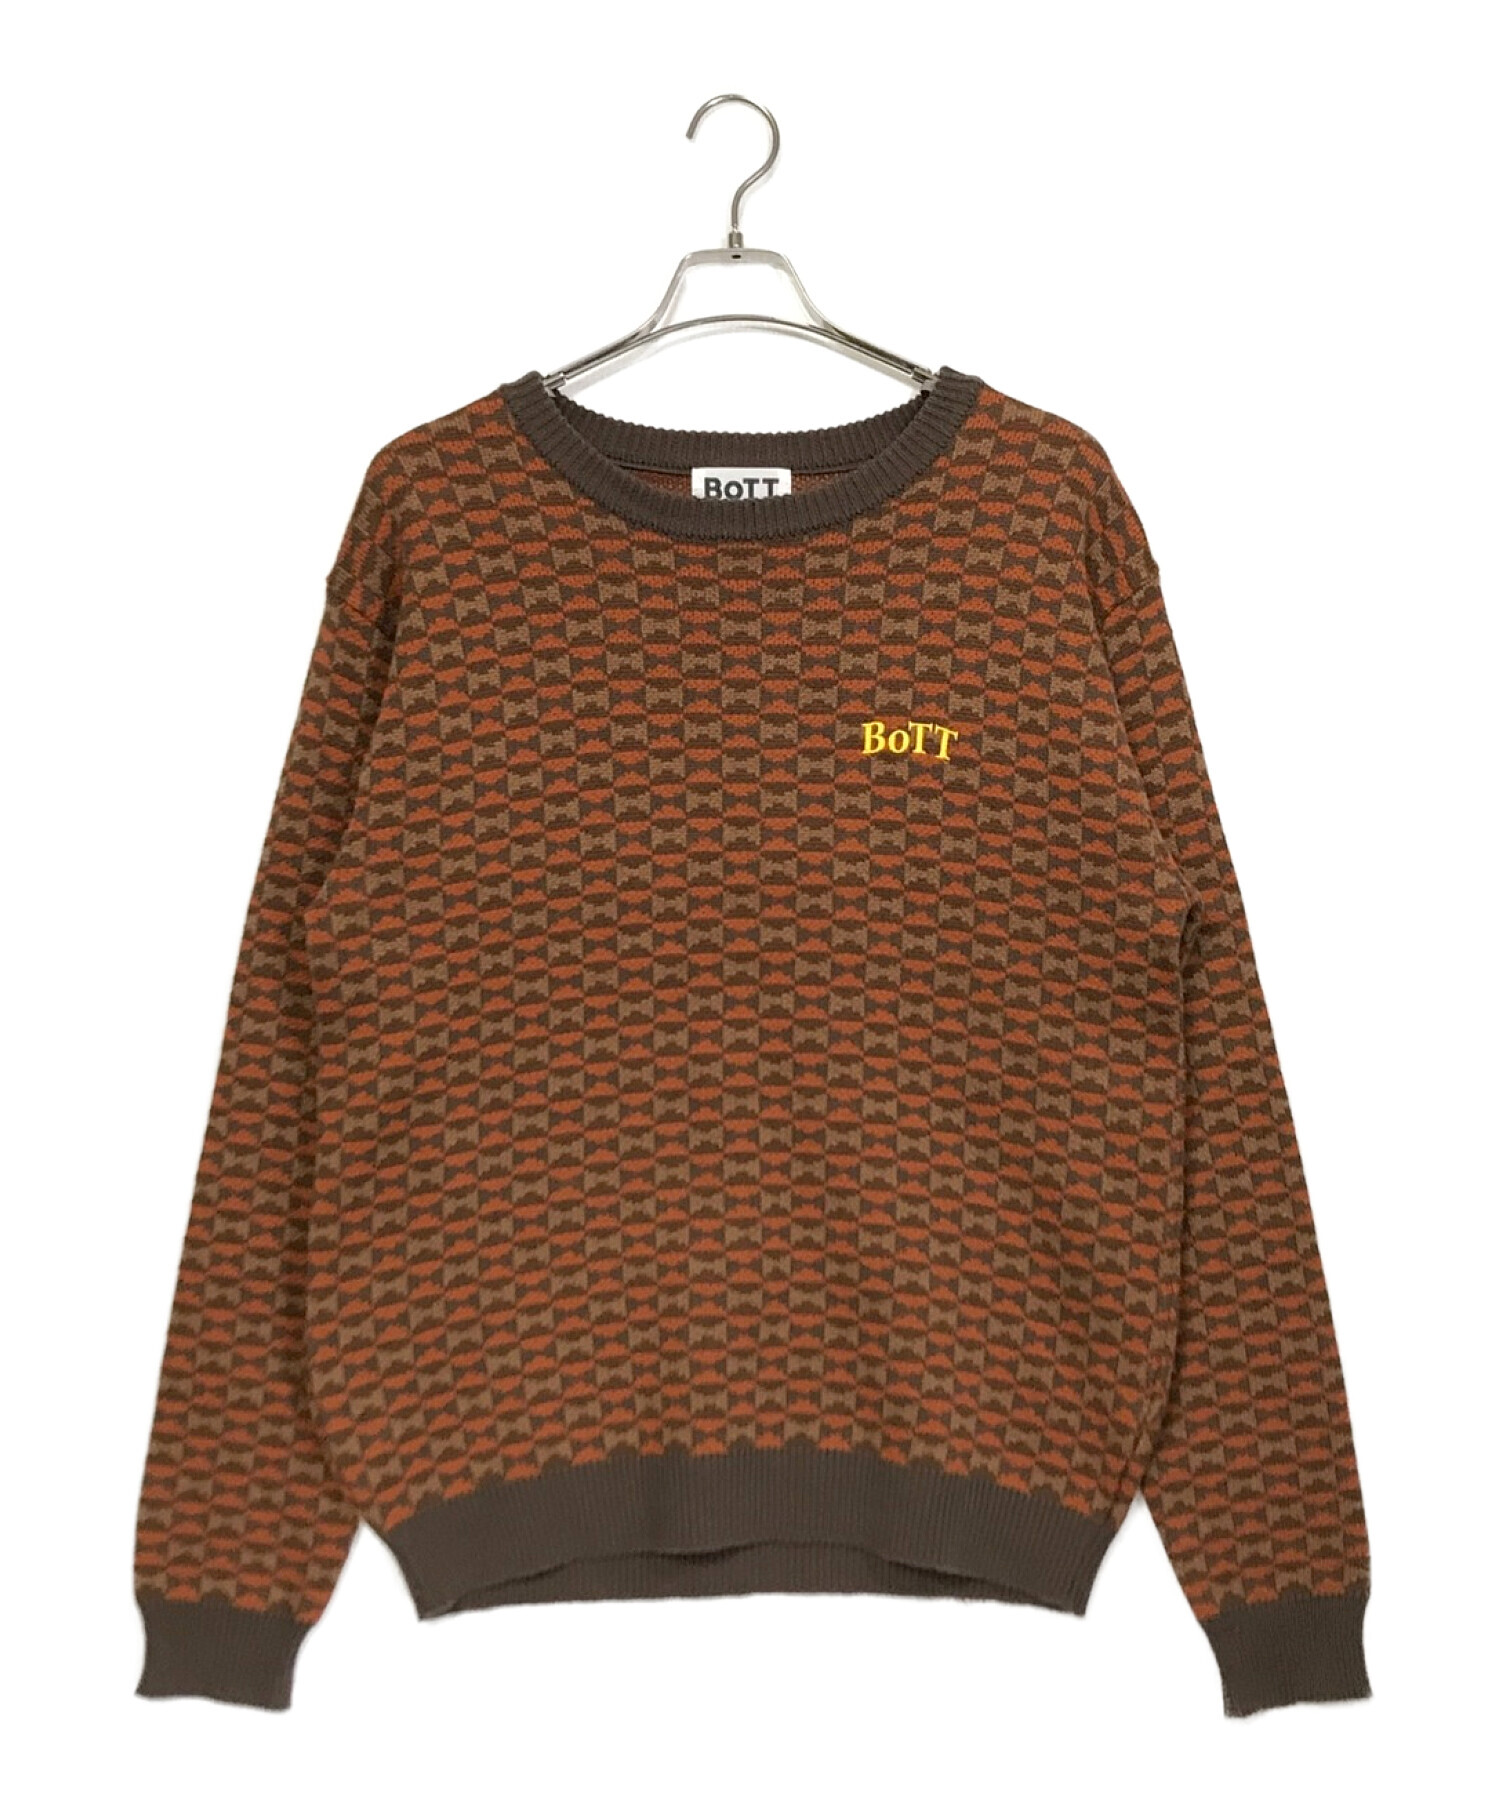 BoTT ボット Century Sweater セーター